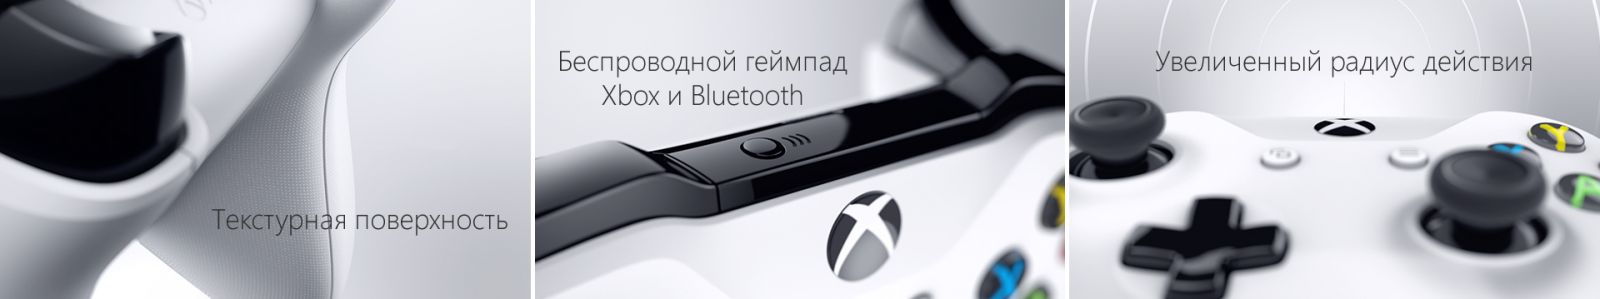 Xbox One S 2TB + FIFA 17 image7